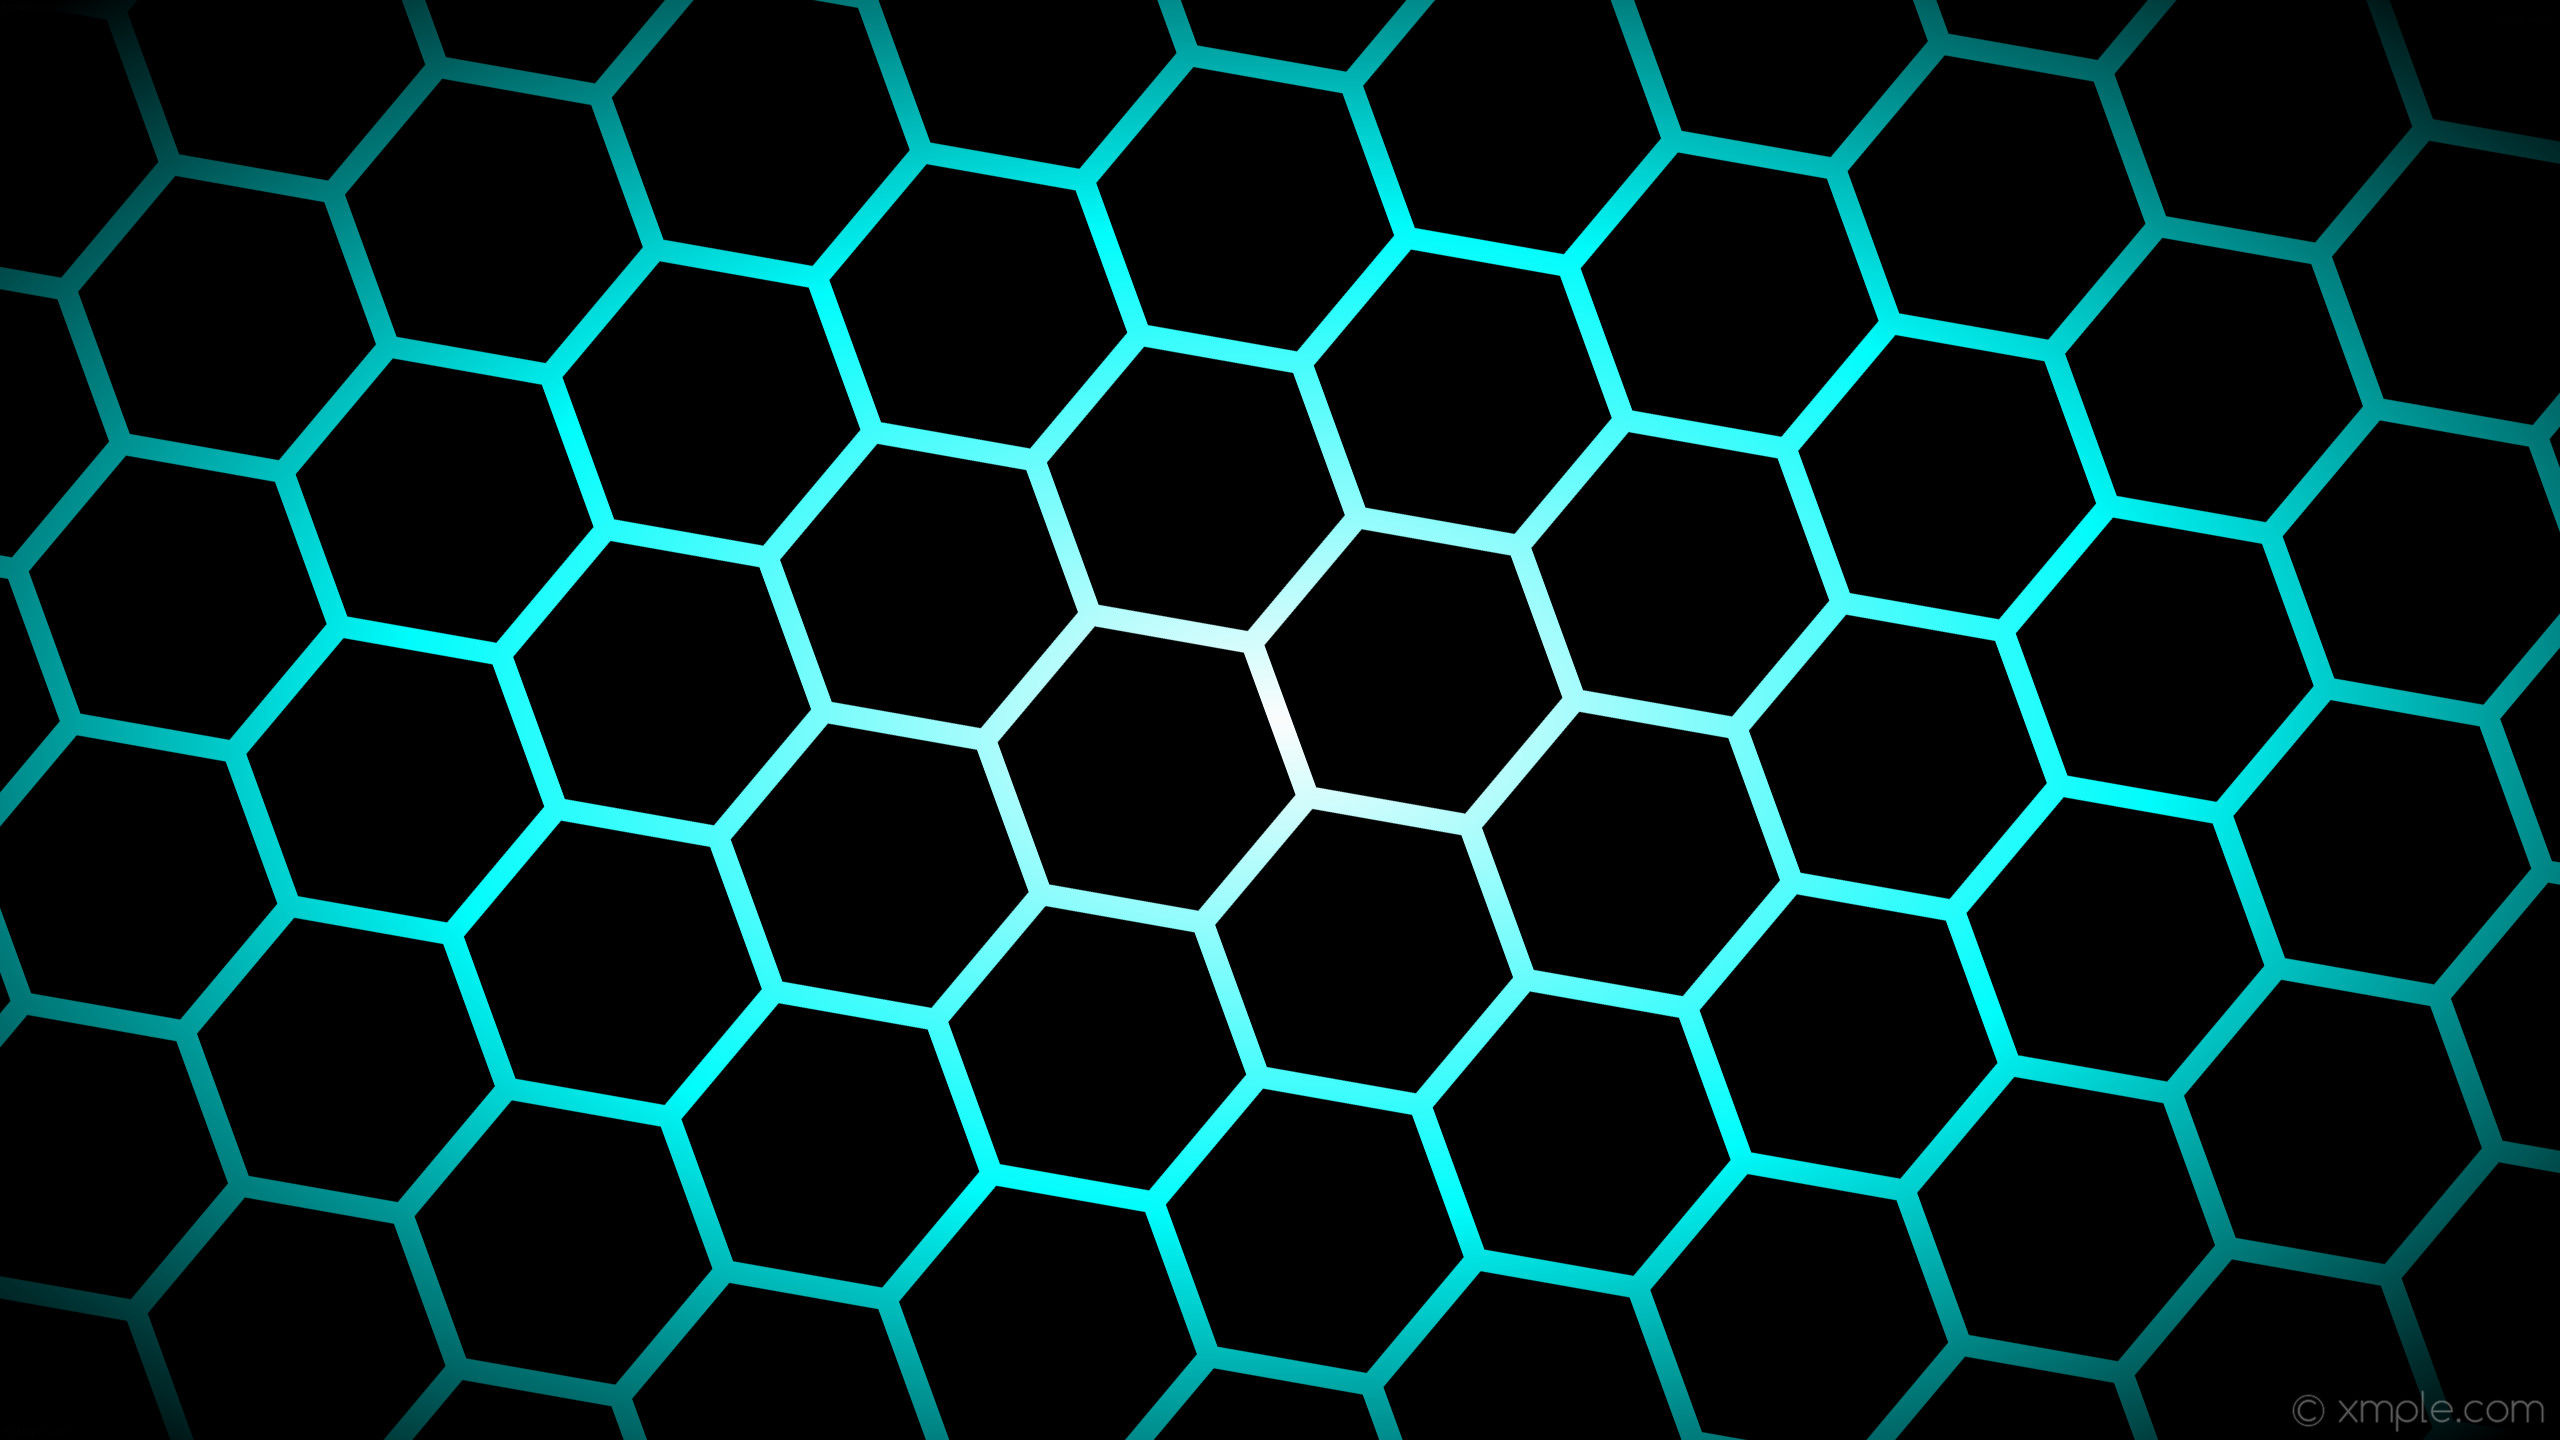 2560x1440 wallpaper glow hexagon black blue white gradient aqua cyan #000000 #ffffff  #00ffff diagonal